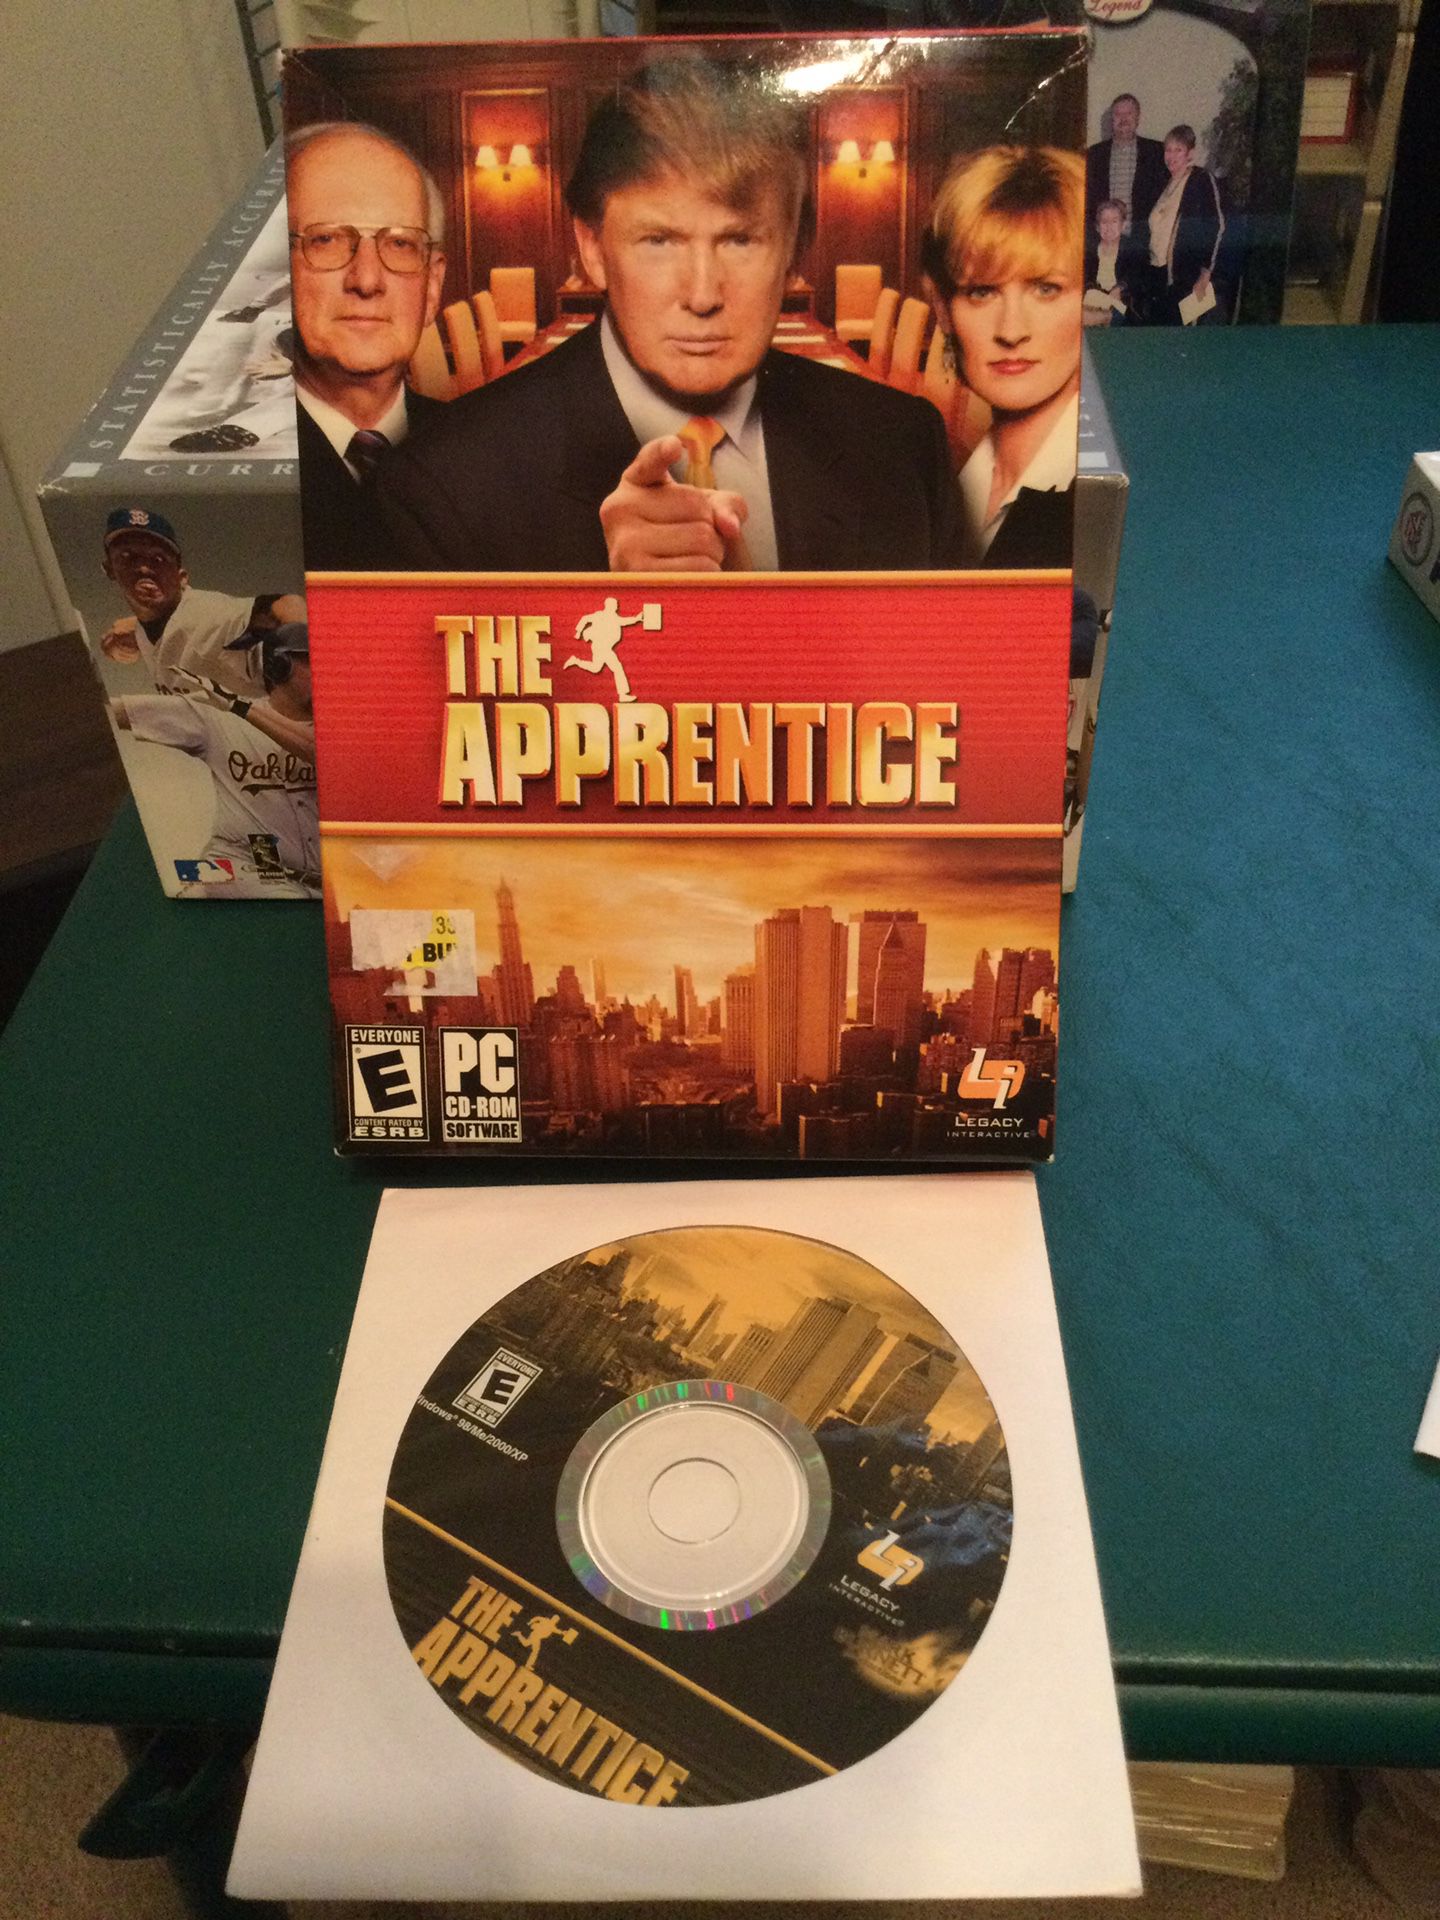 Donald Trump "The Apprentice" CD PC Computer Game - Excellent Condition